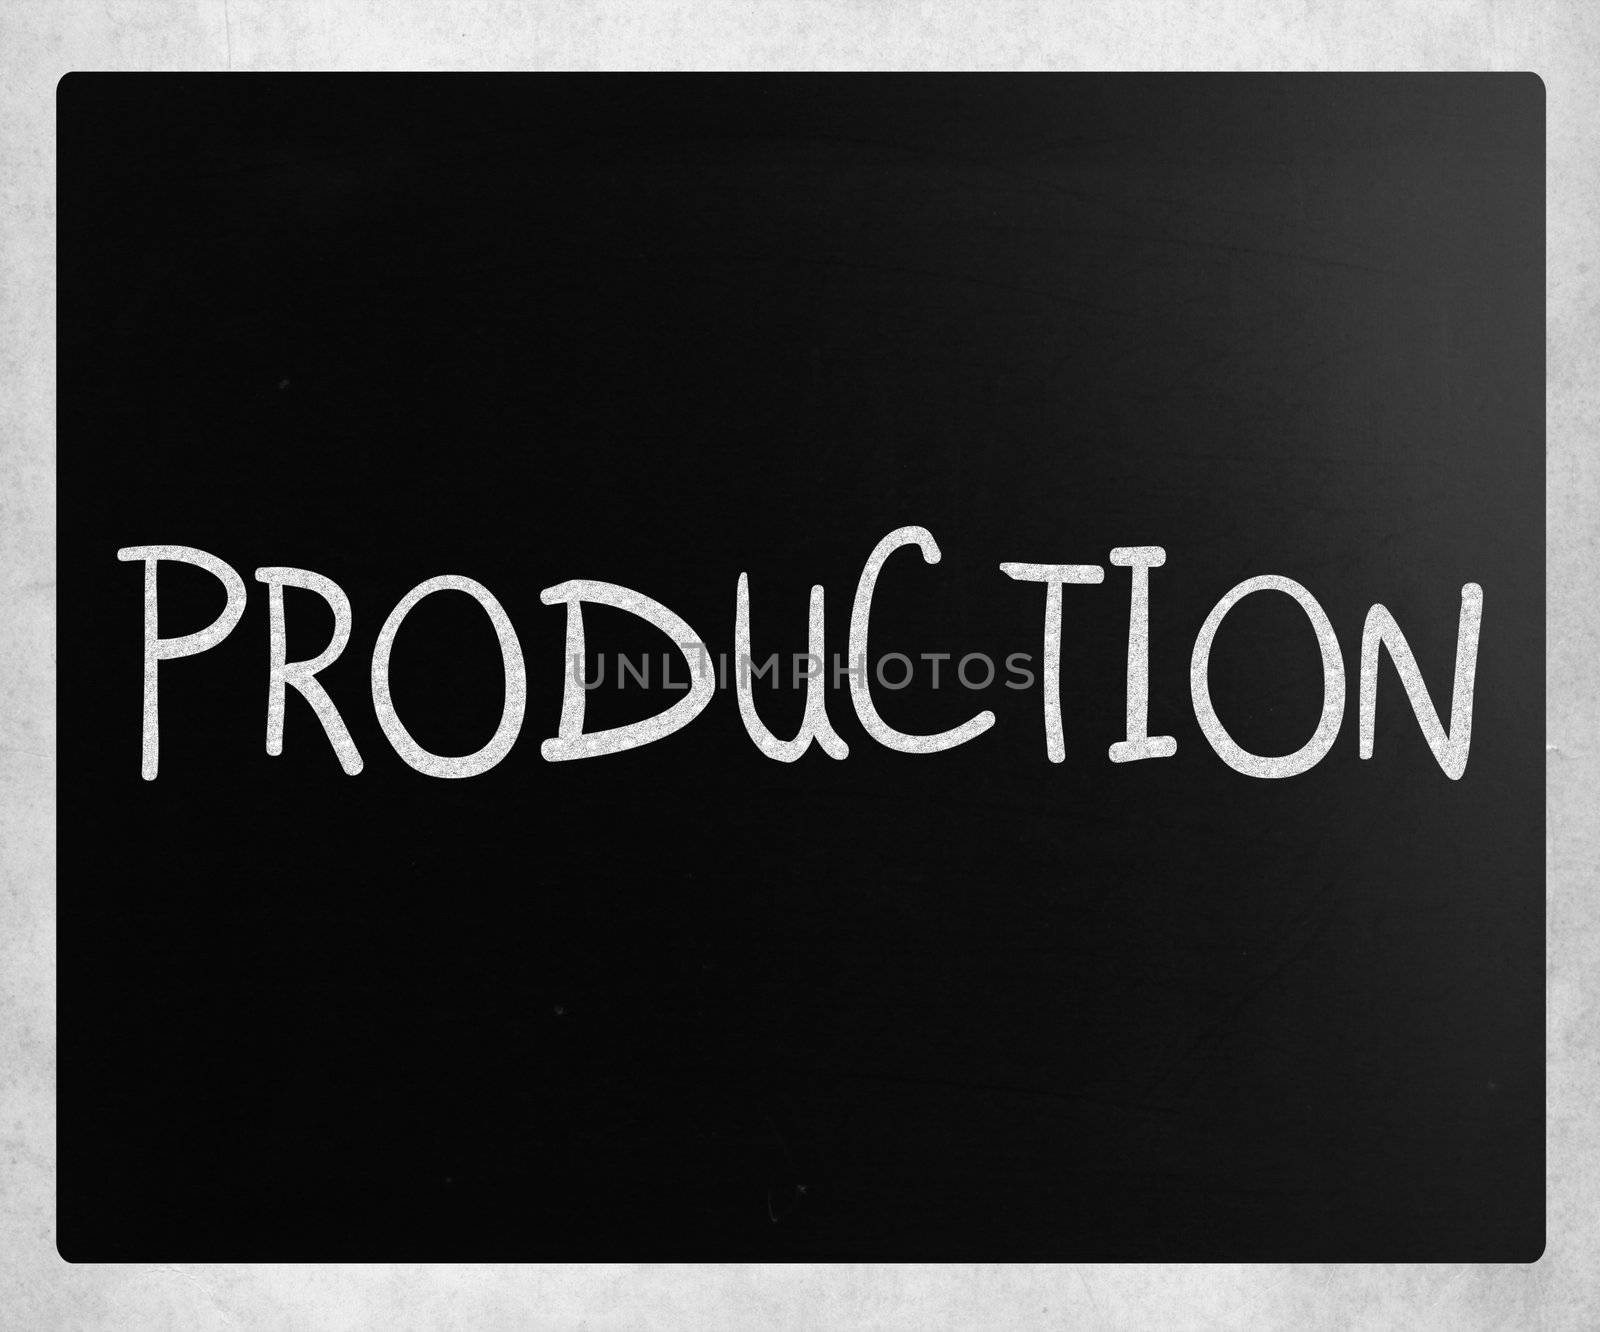 "Production" handwritten with white chalk on a blackboard